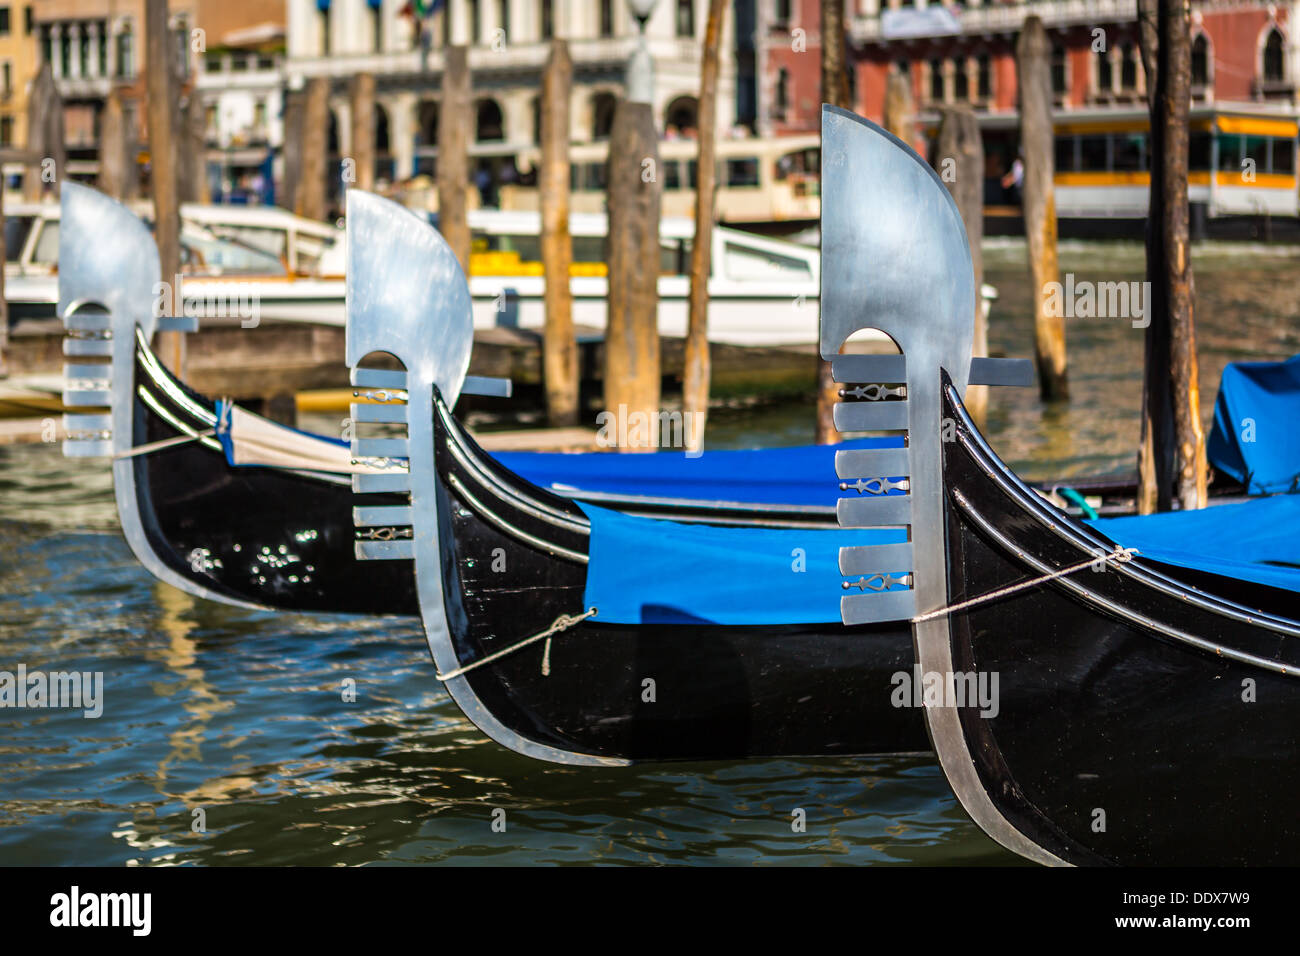 Three venetian gondolas moored on a water street in Venice, Italy Stock Photo